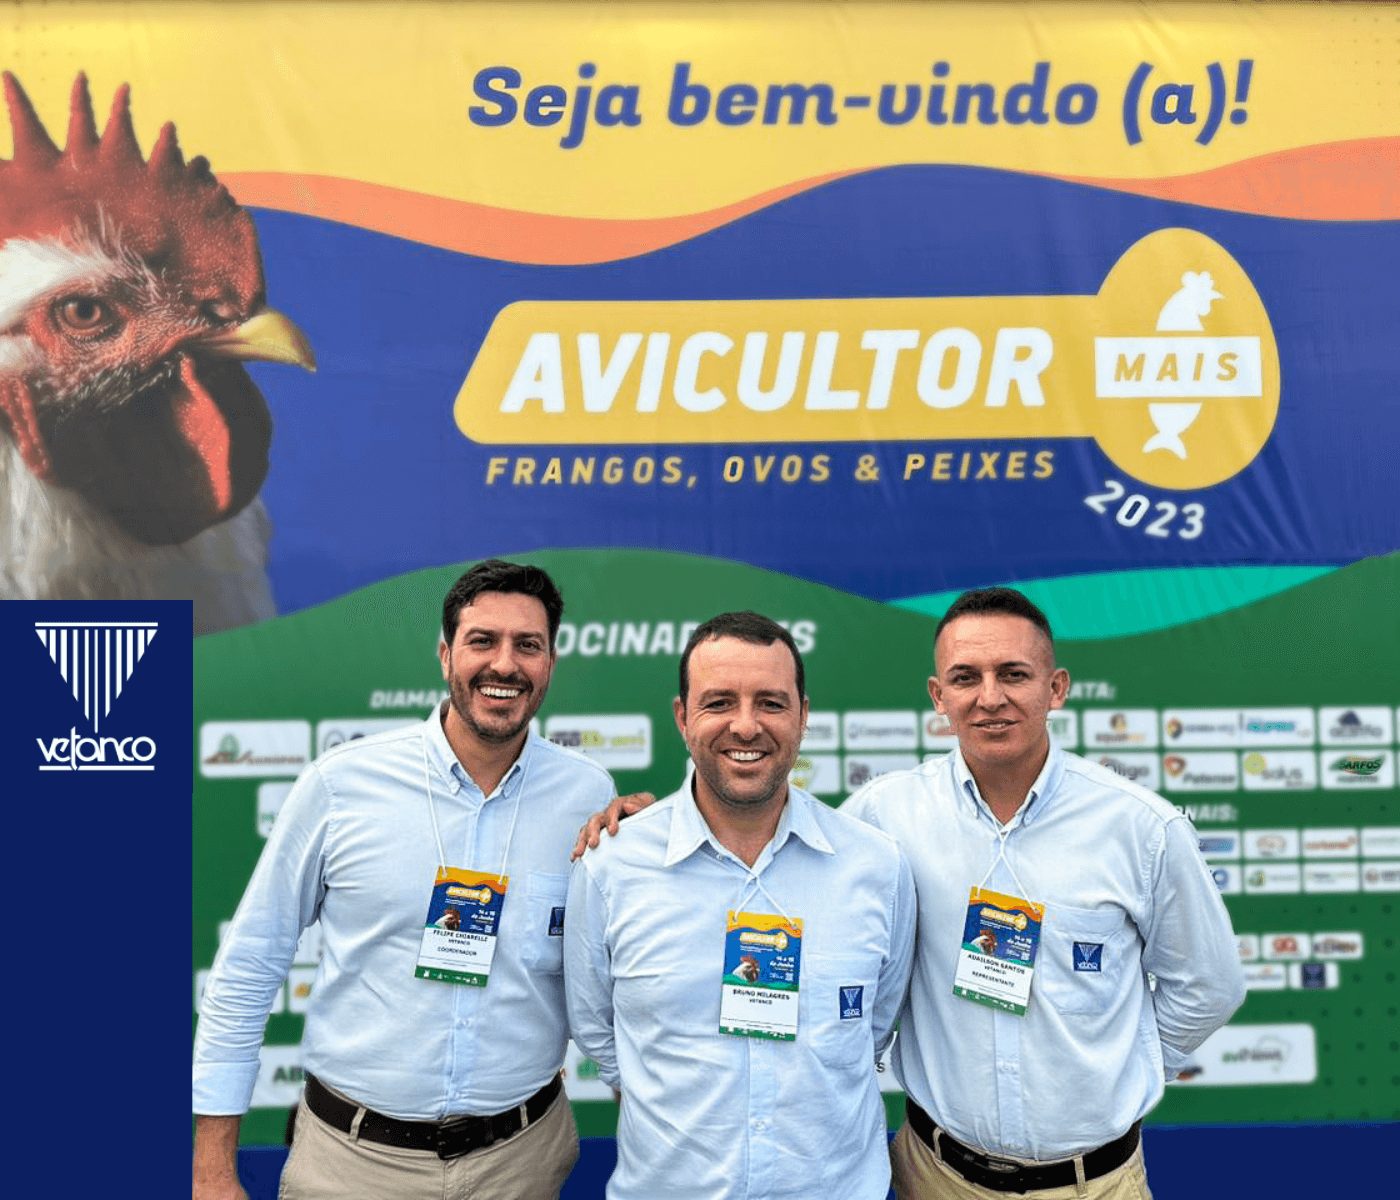 Vetanco Brasil patrocina O Avicultor 2023, maior evento da avicultura mineira